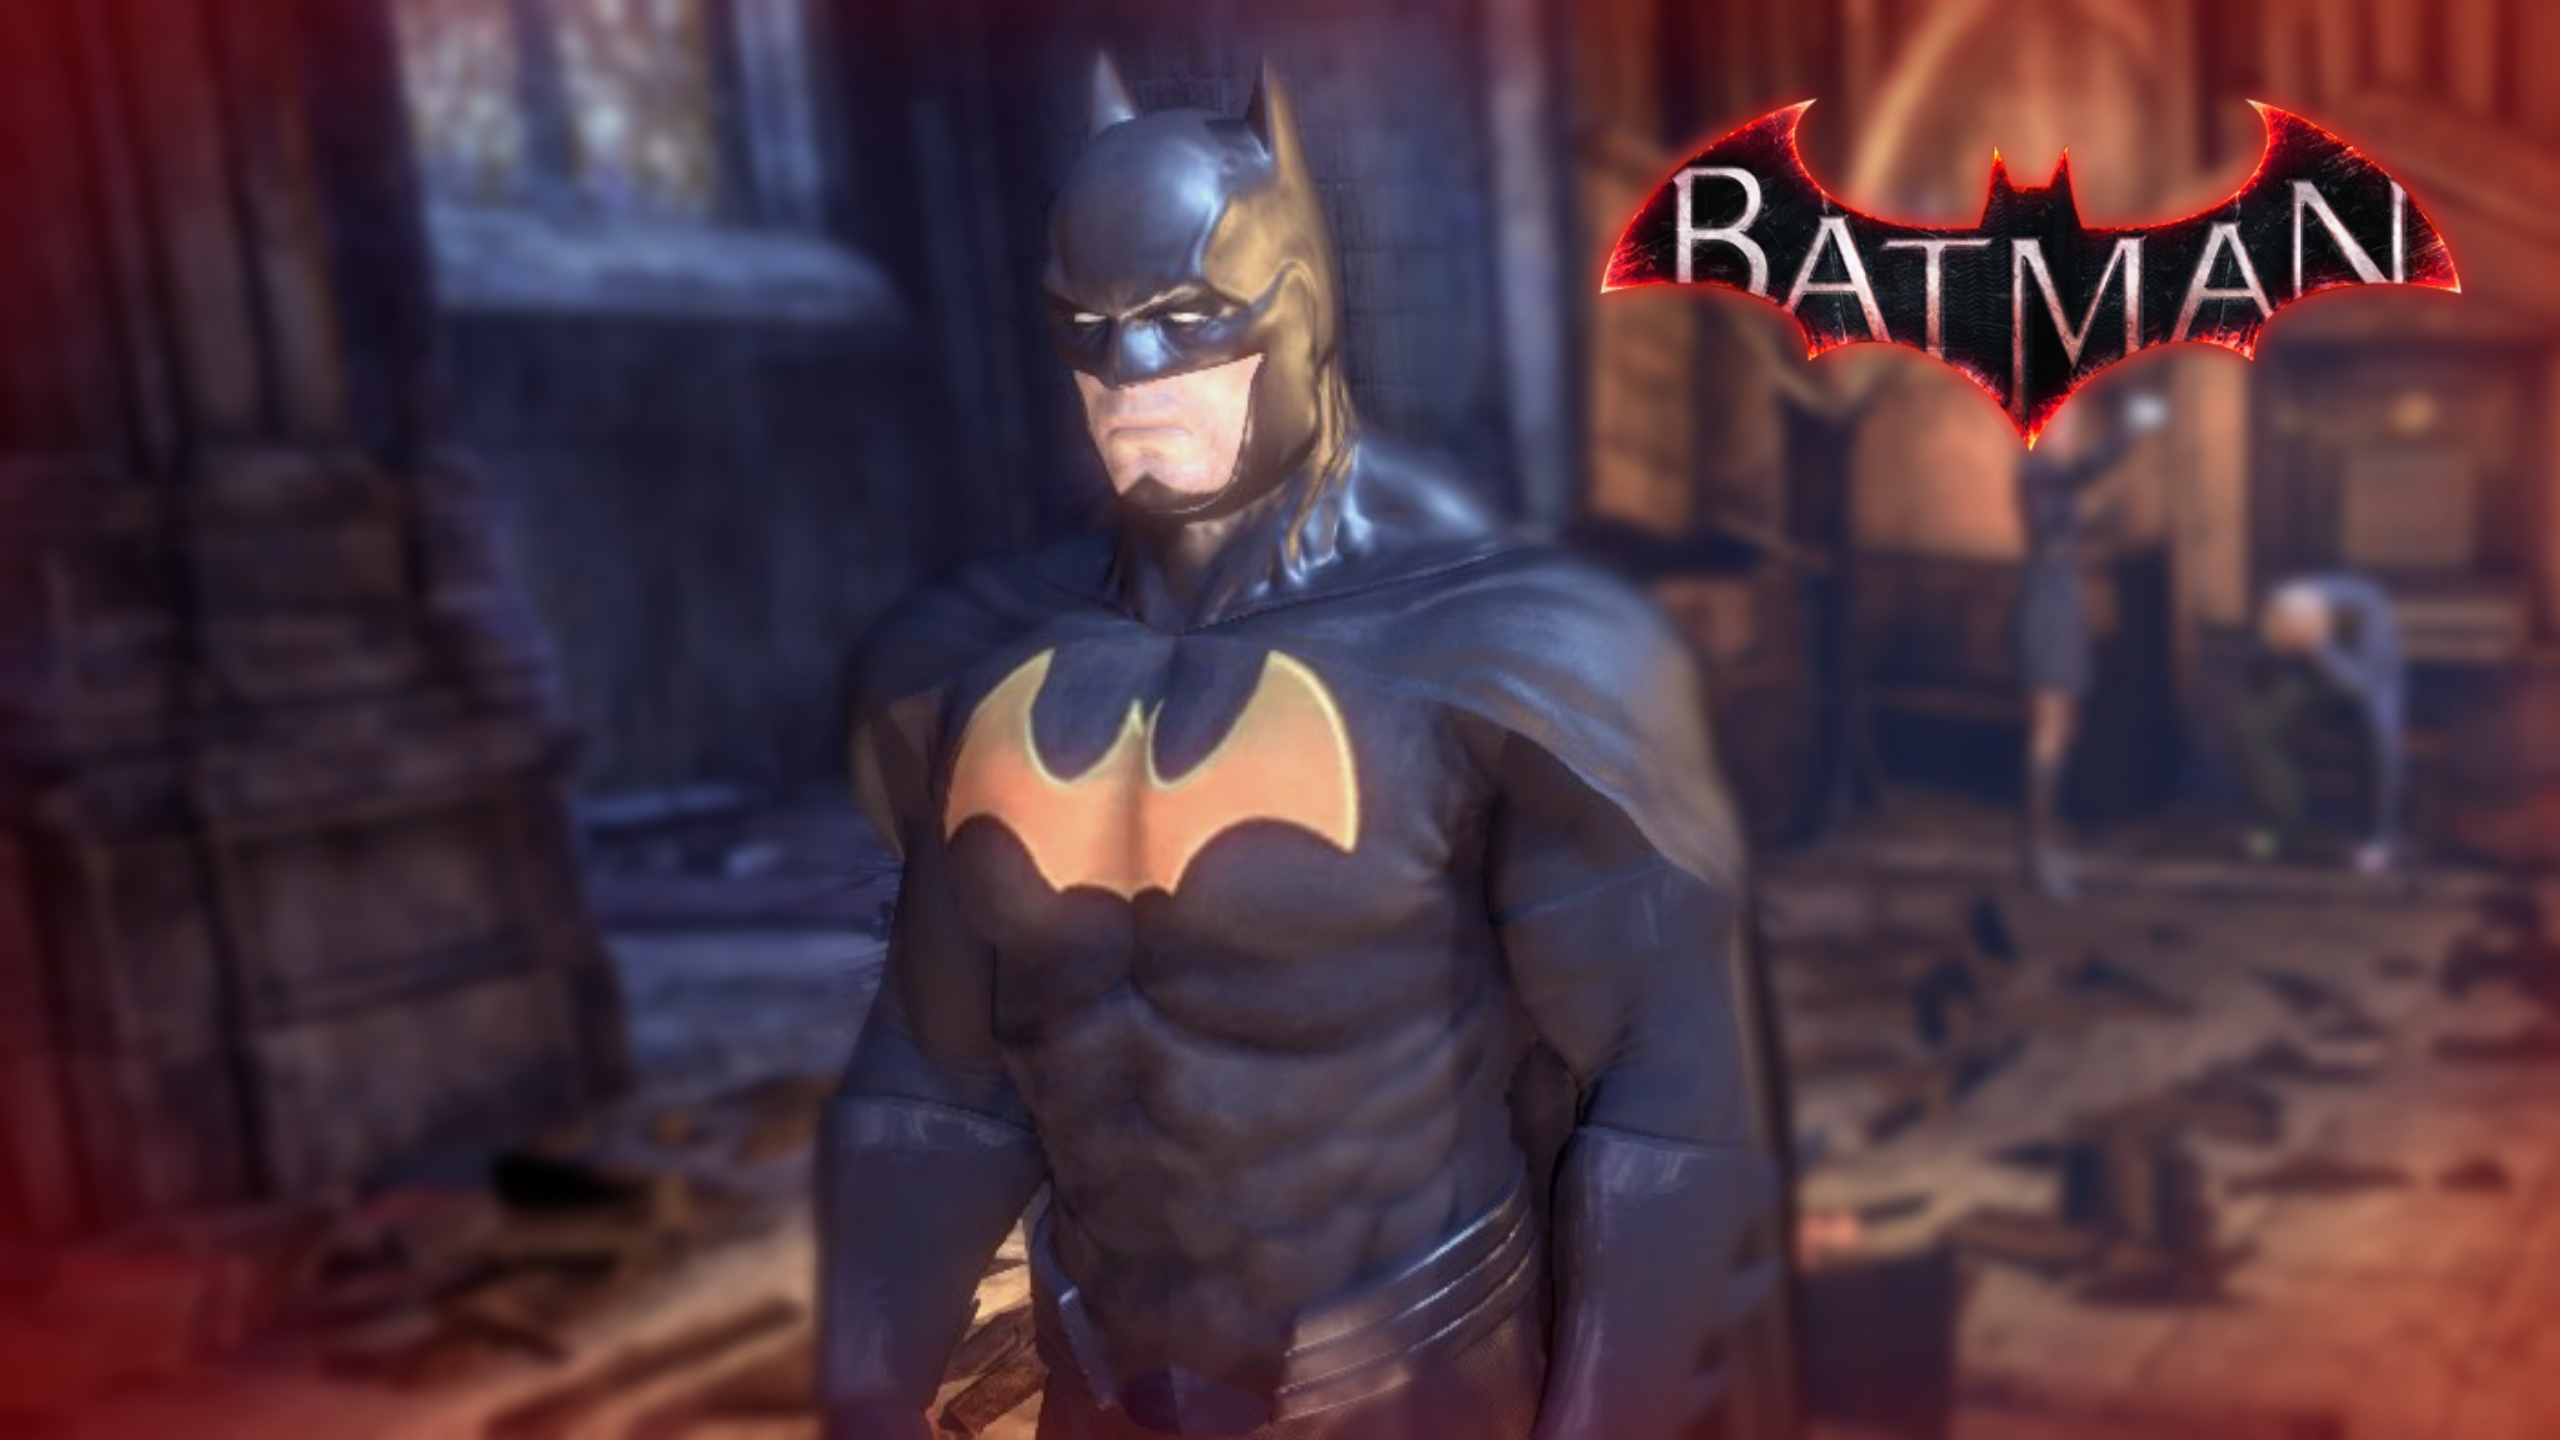 Batman origins mods. Бэтмен из Thrillkiller. Скины для Бэтмена Аркхем Сити. Бэтмэн аркхам Сити скины. Batman Arkham City Remastered Robin.